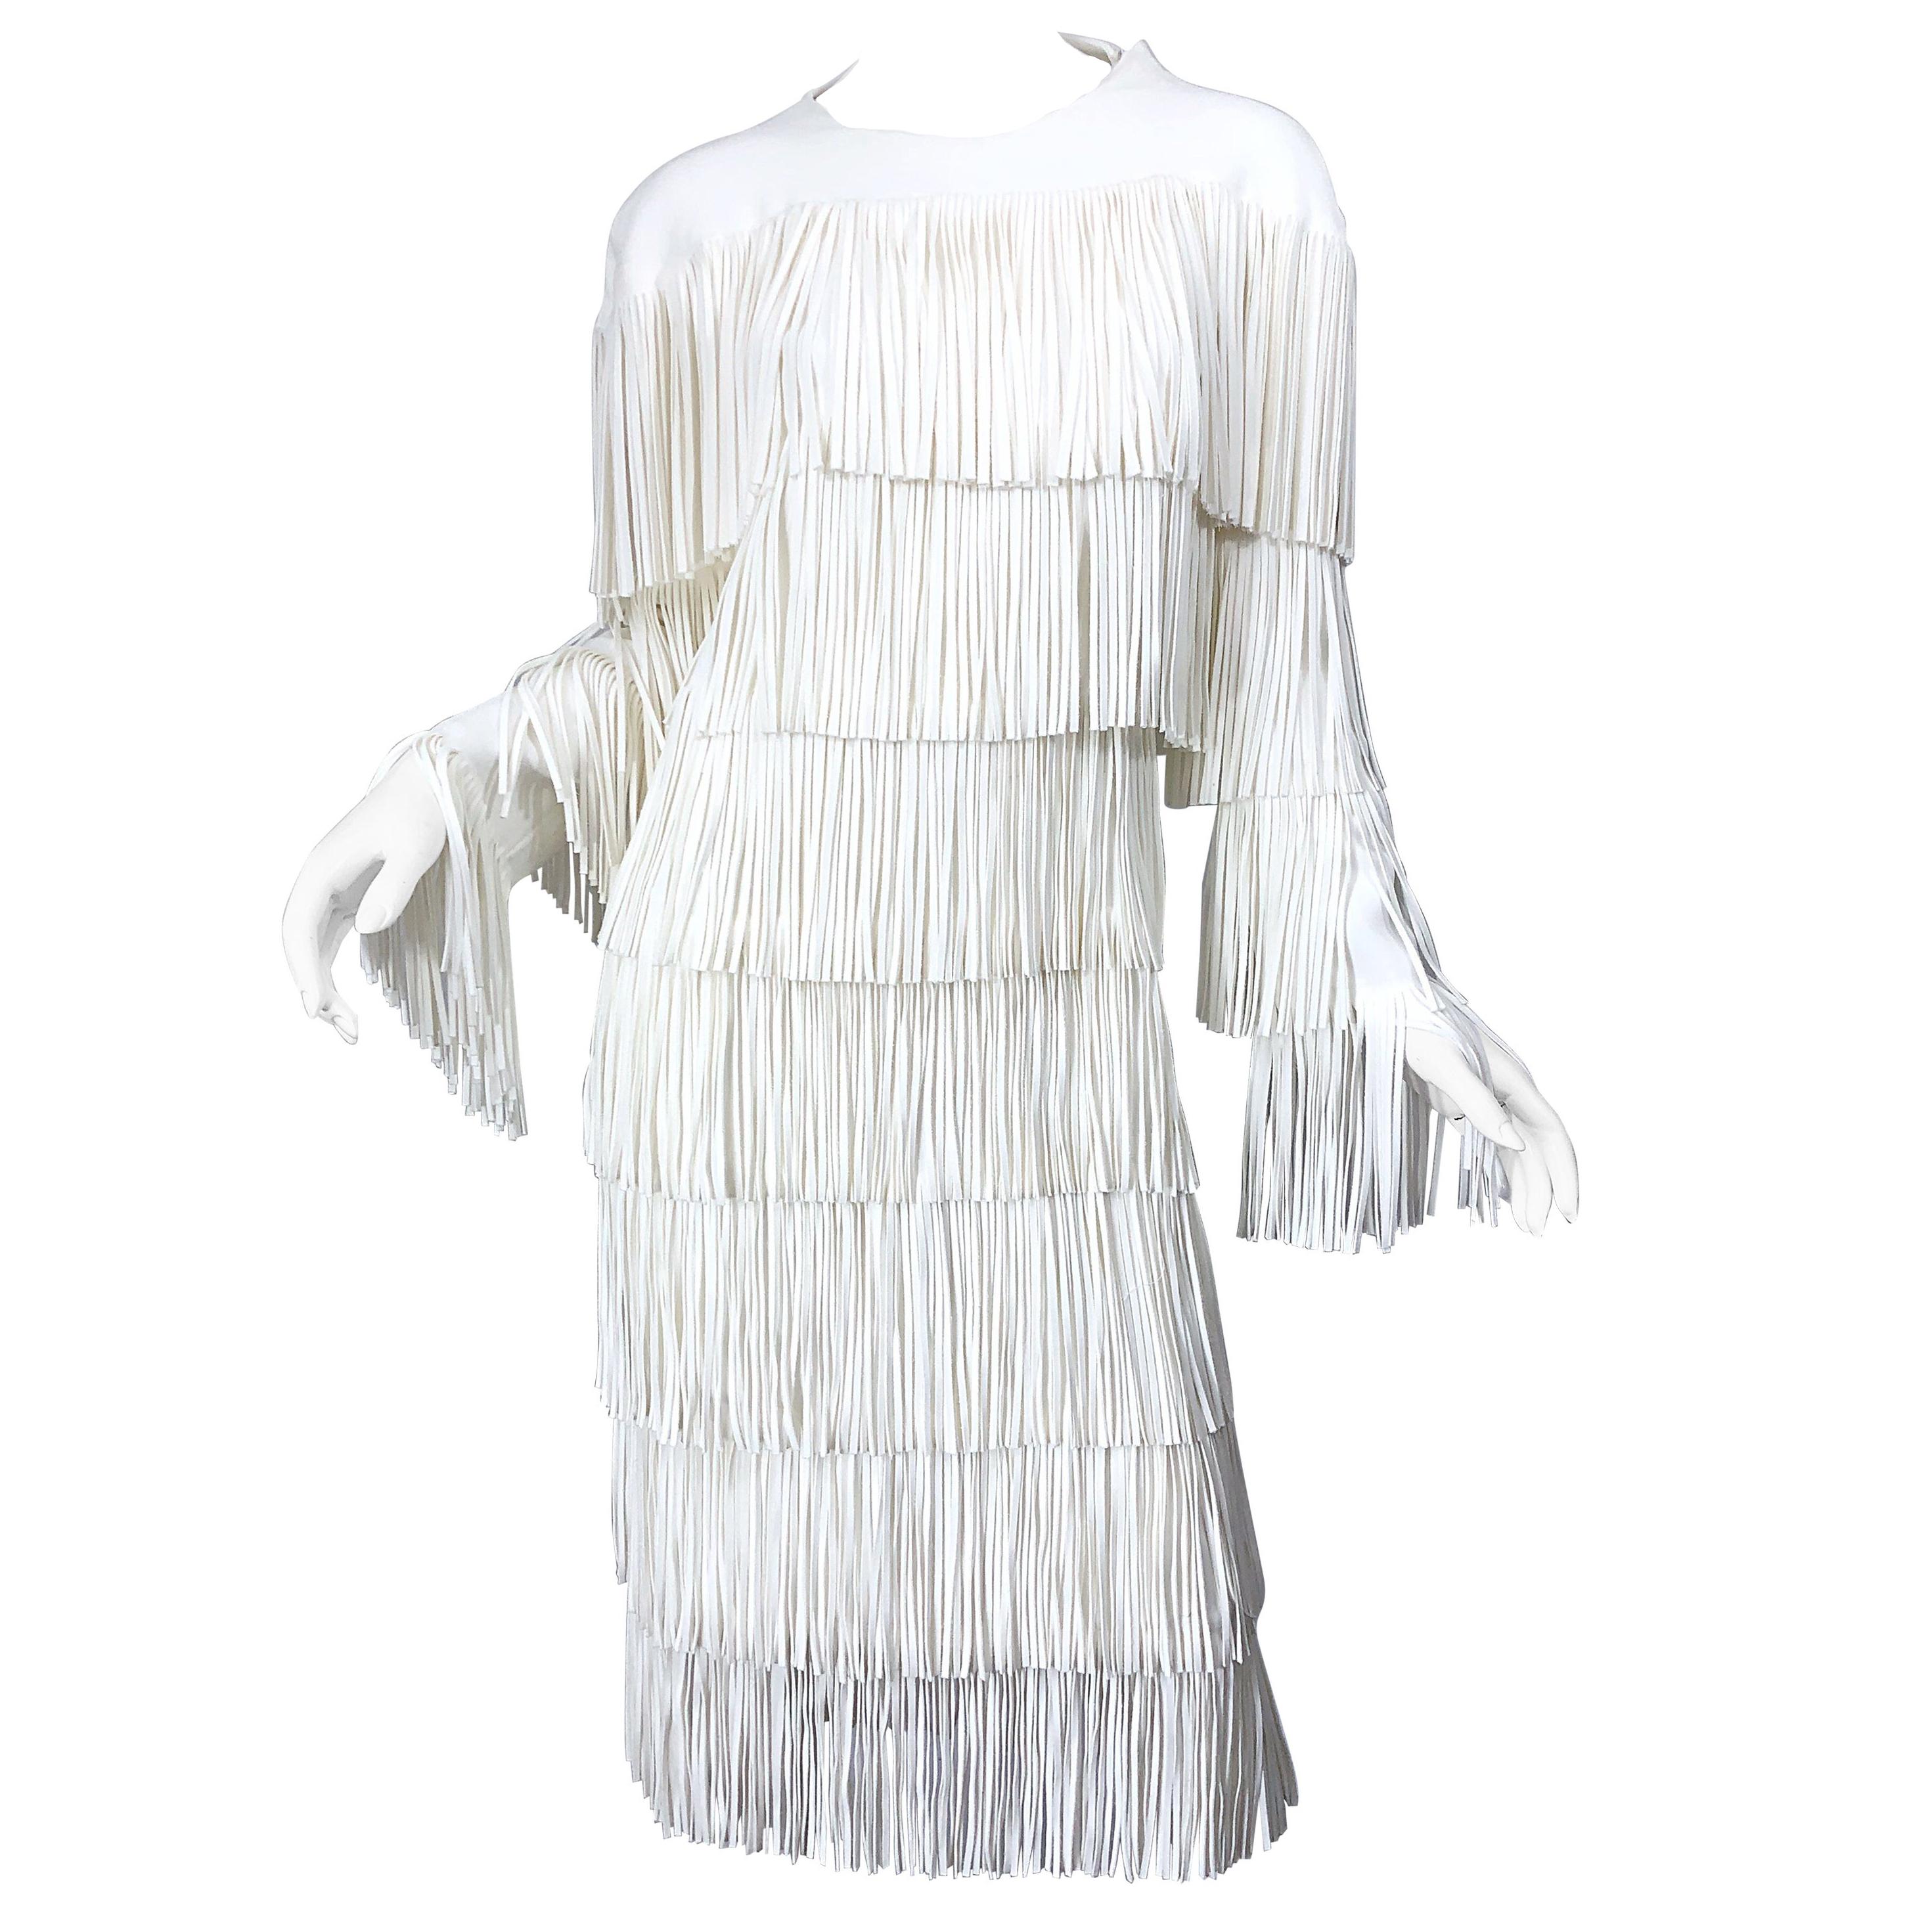 NWT Tom Ford $7, 000 Runway Fall 2015 Size 42 / 8 White Open Back Fringe Dress